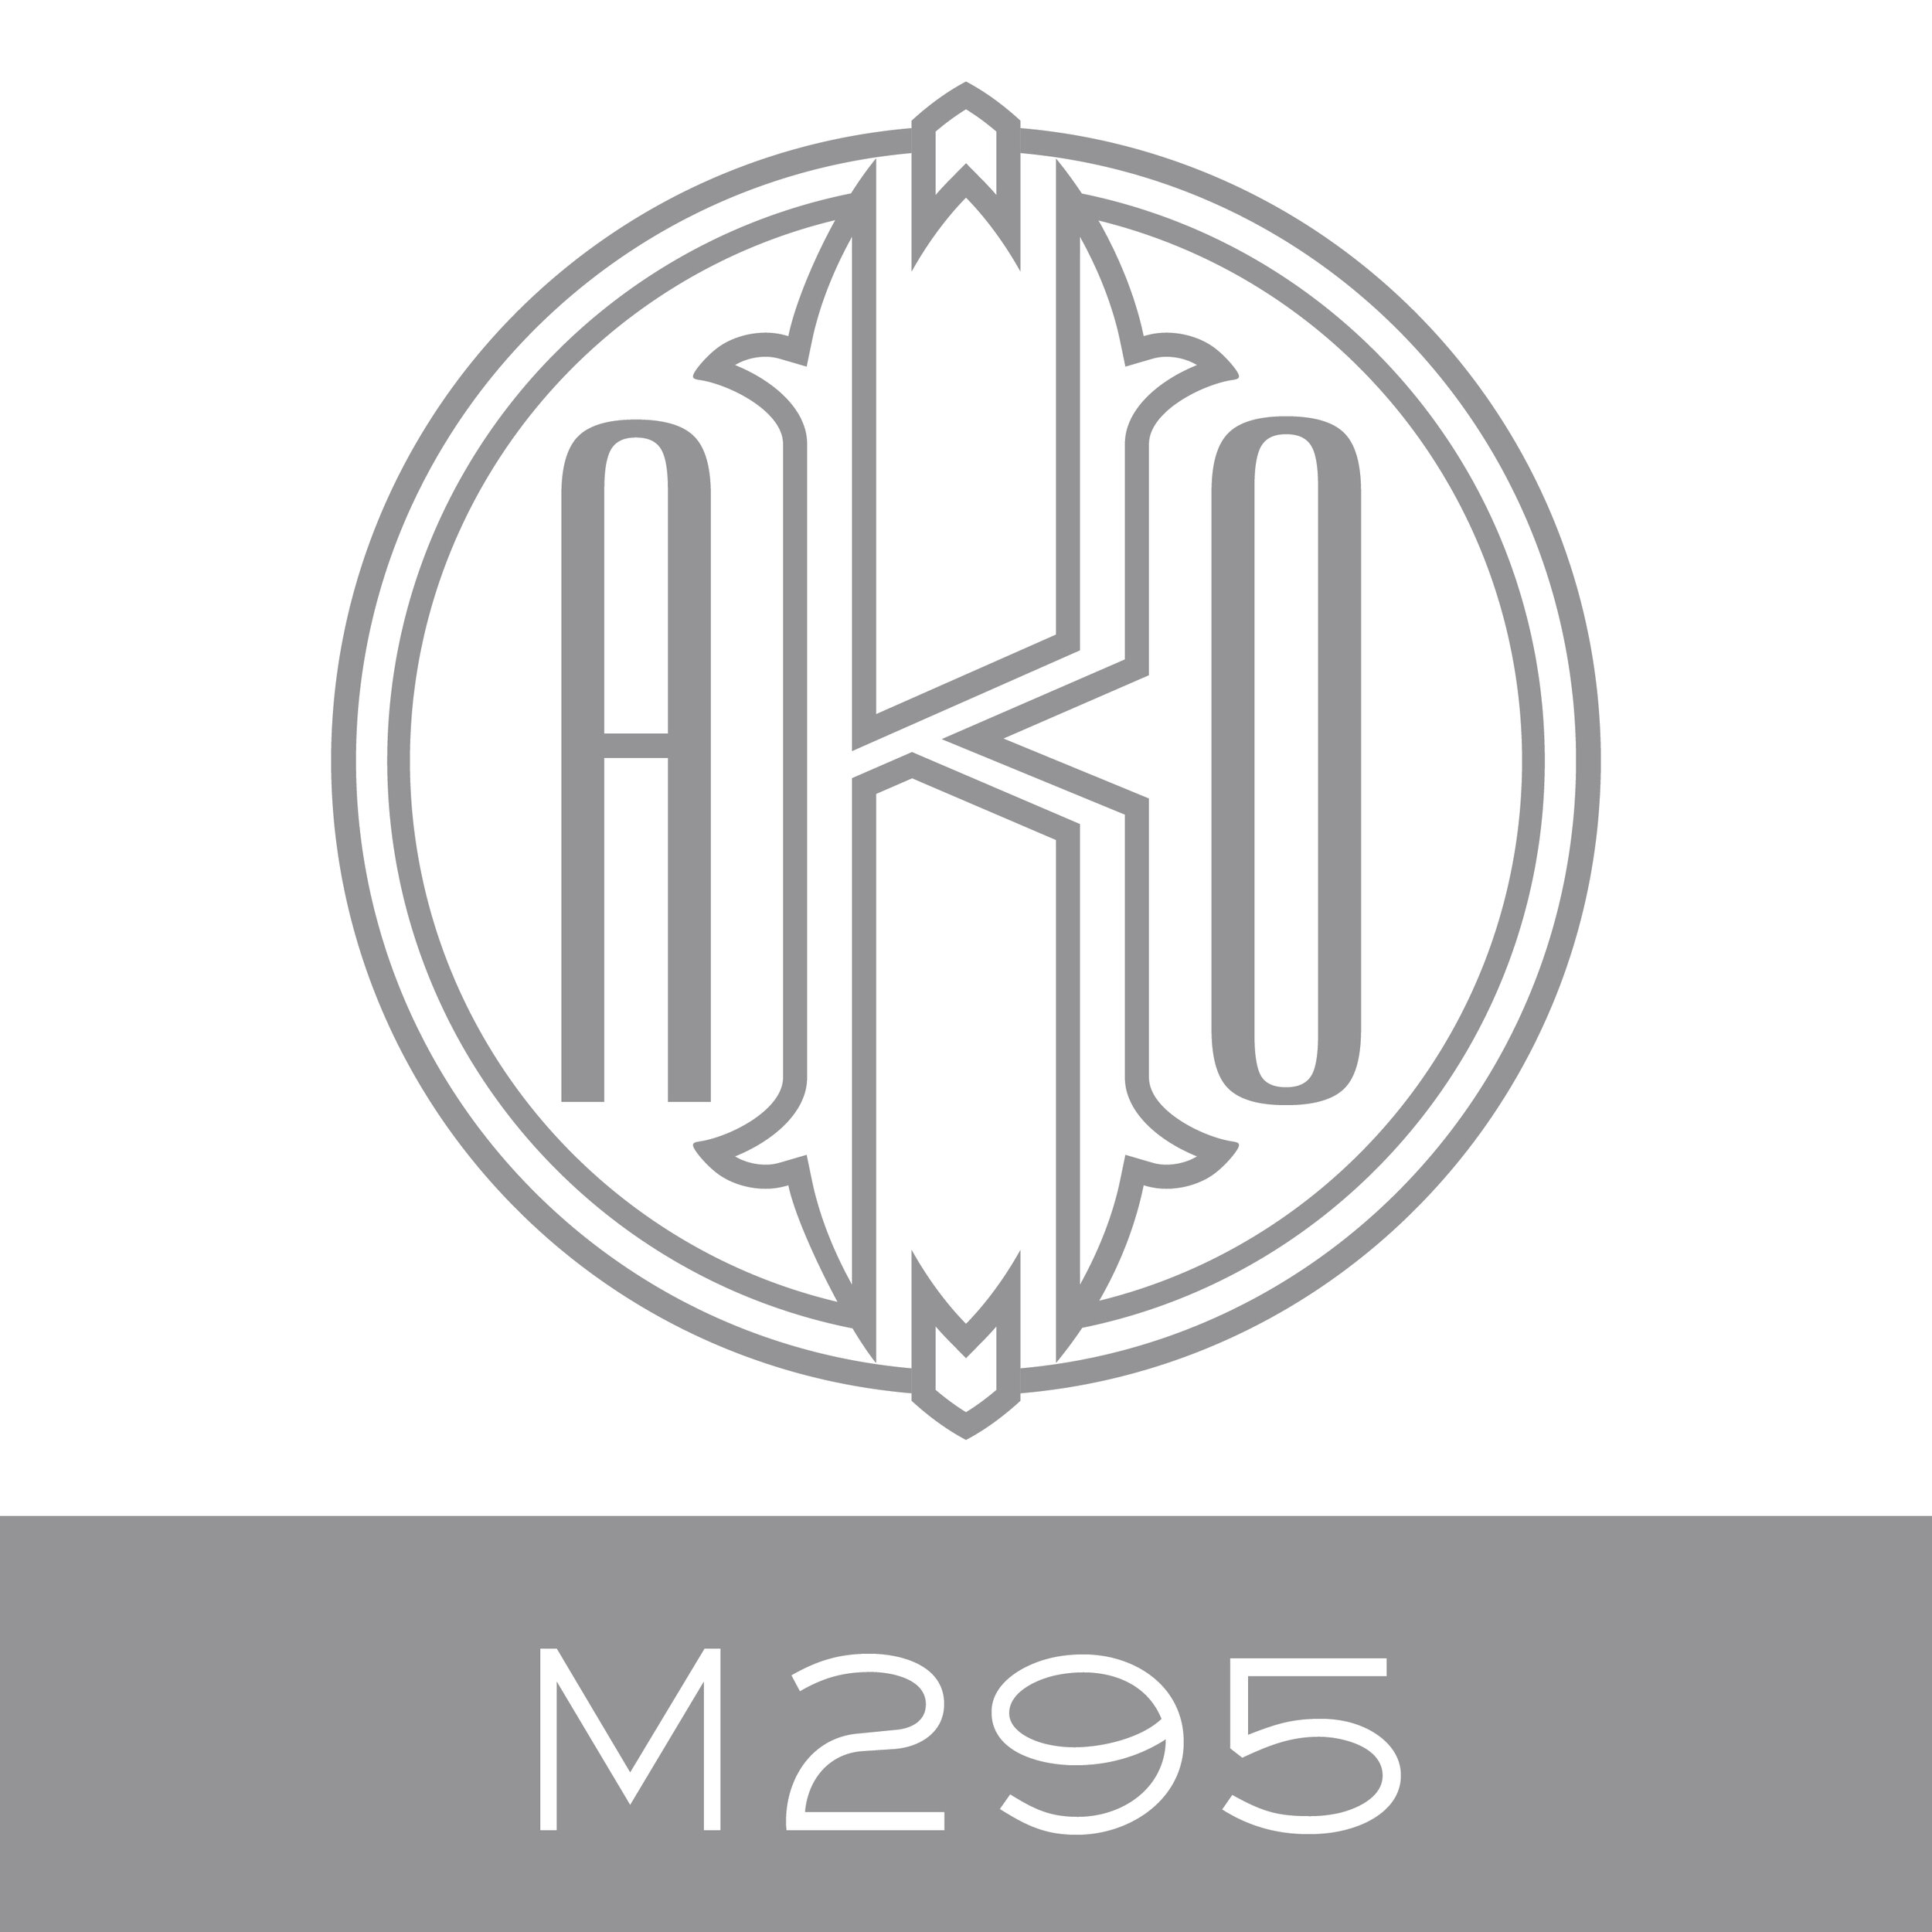 M295.jpg